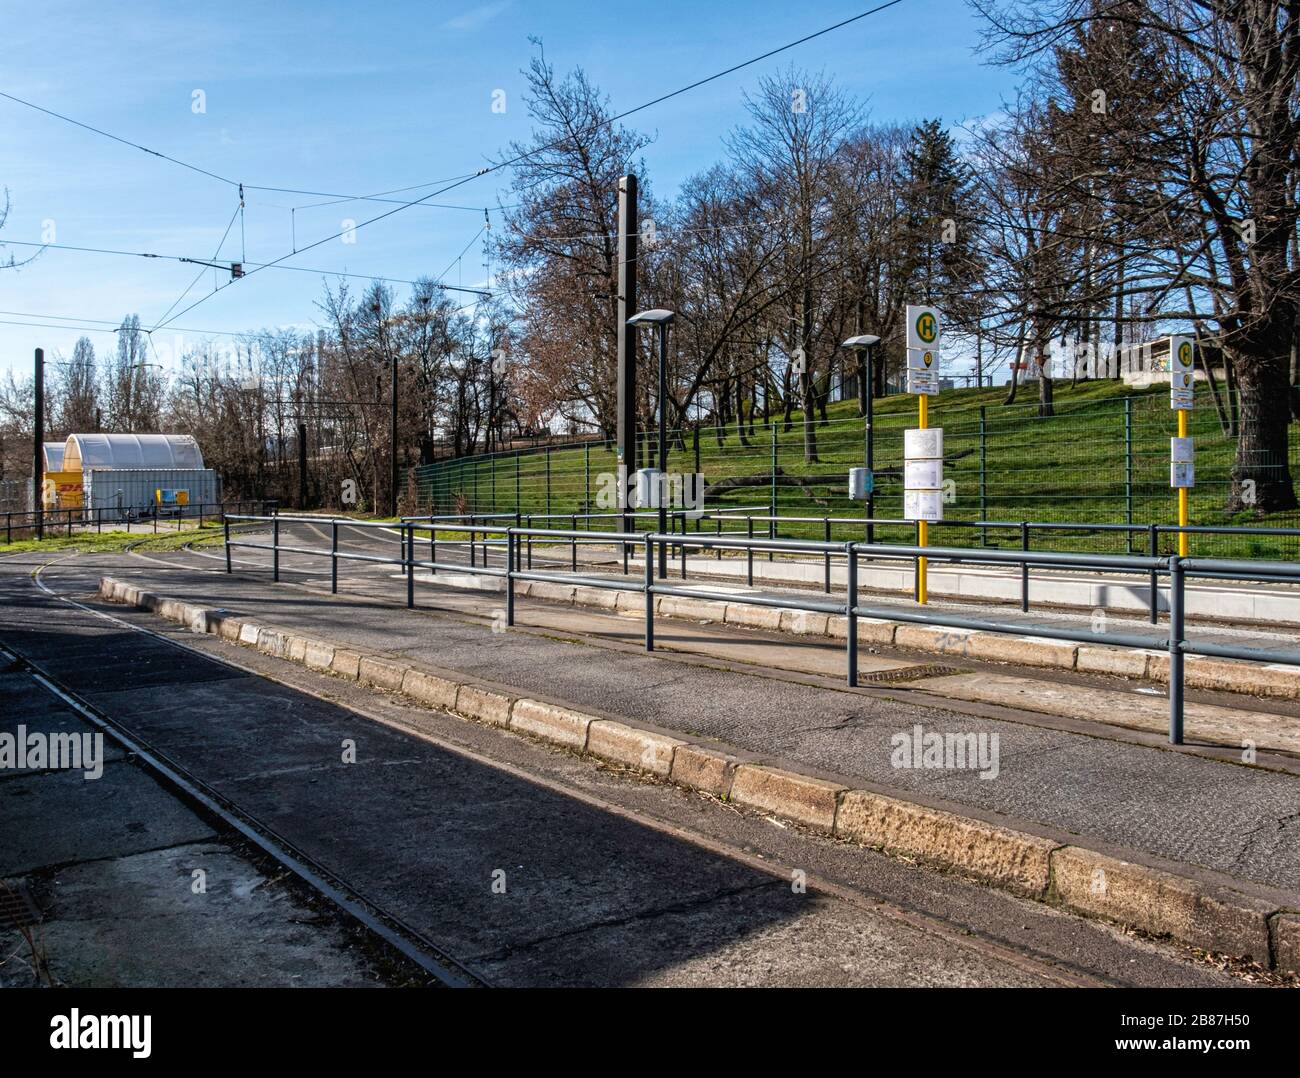 Friedrich Ludwig Jahn Sportpark, fermata del tram M10 e binari ferroviari a Eberswalder strasse, Prenzlauer Berg, Berlino. Foto Stock